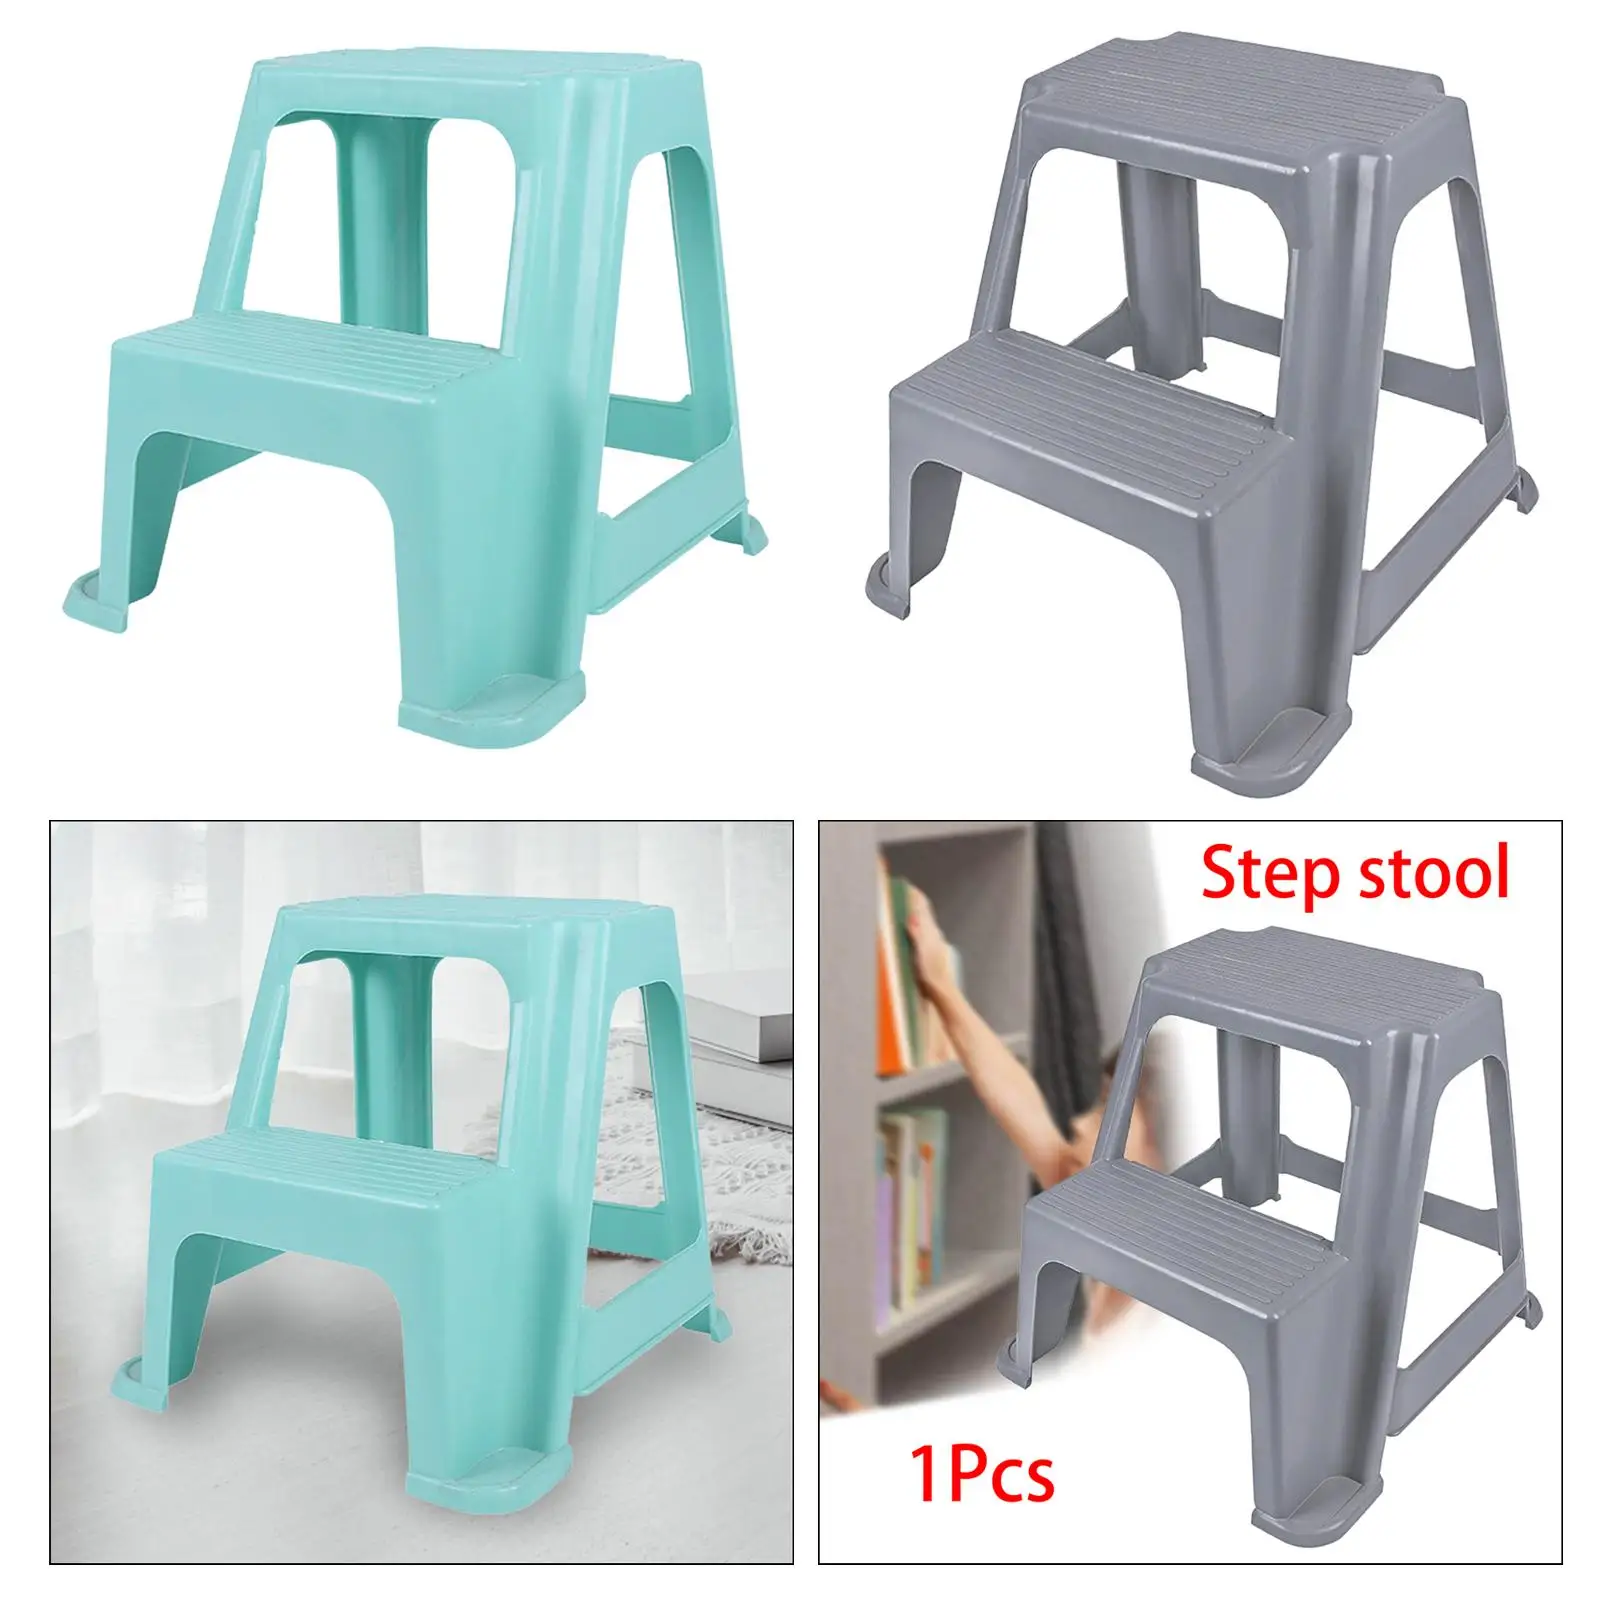 2 Step Stool Stepping Stool Anti Slip Bedside Step Stool Footstool Two Step Stool Stepstool for Kids Adults Dogs Elderly Nursery